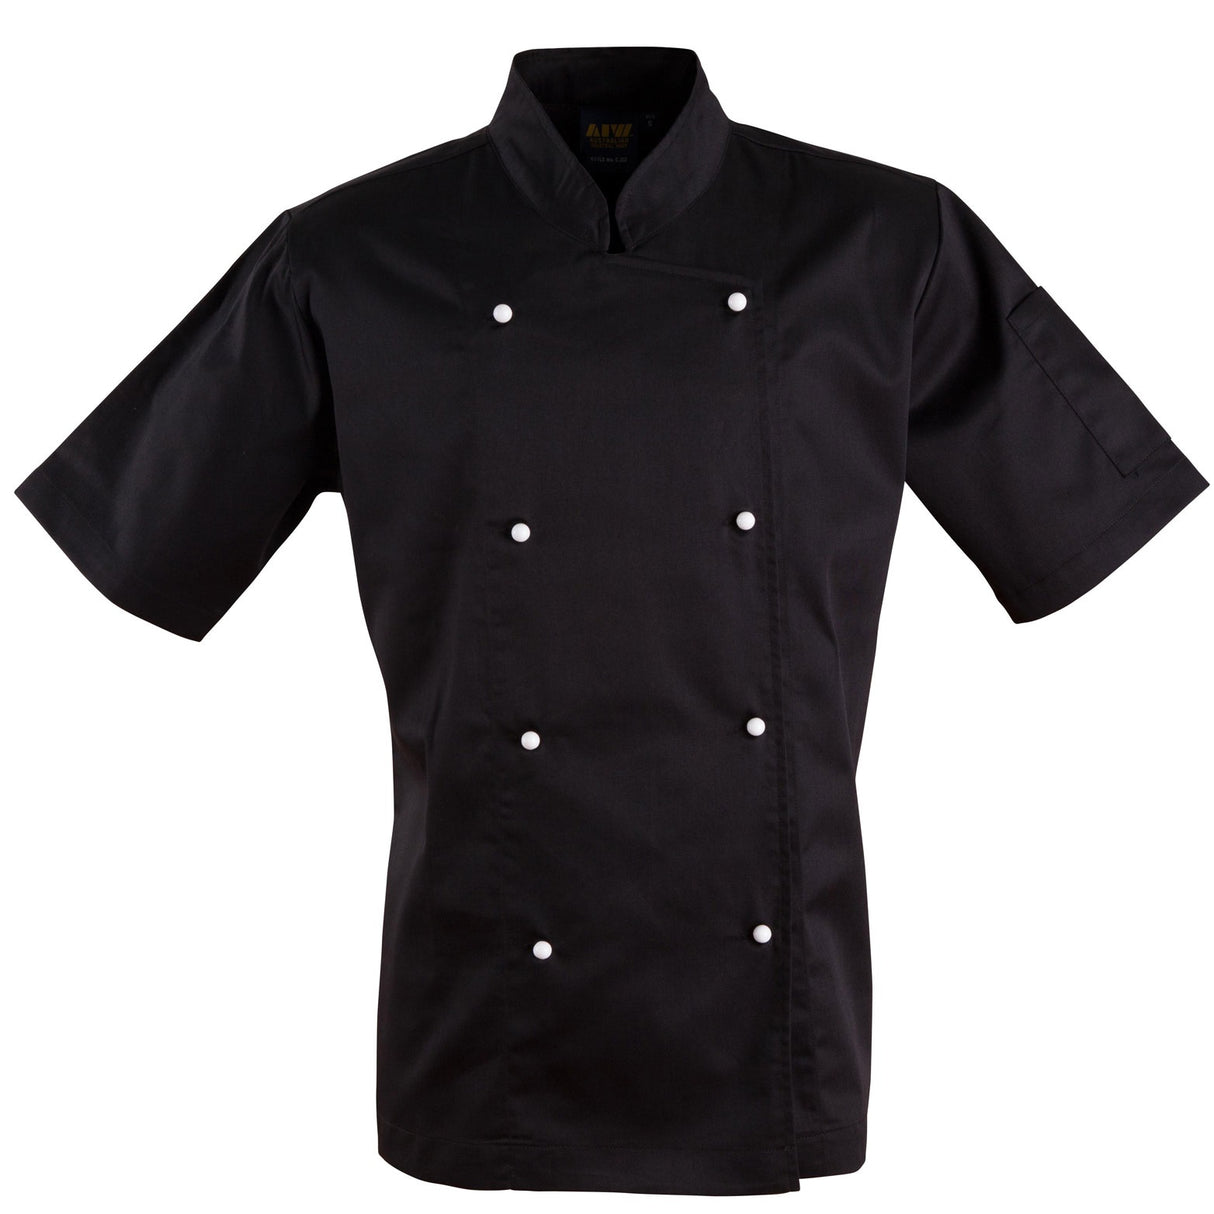 CJ02 Chef's Short Sleeve Jacket